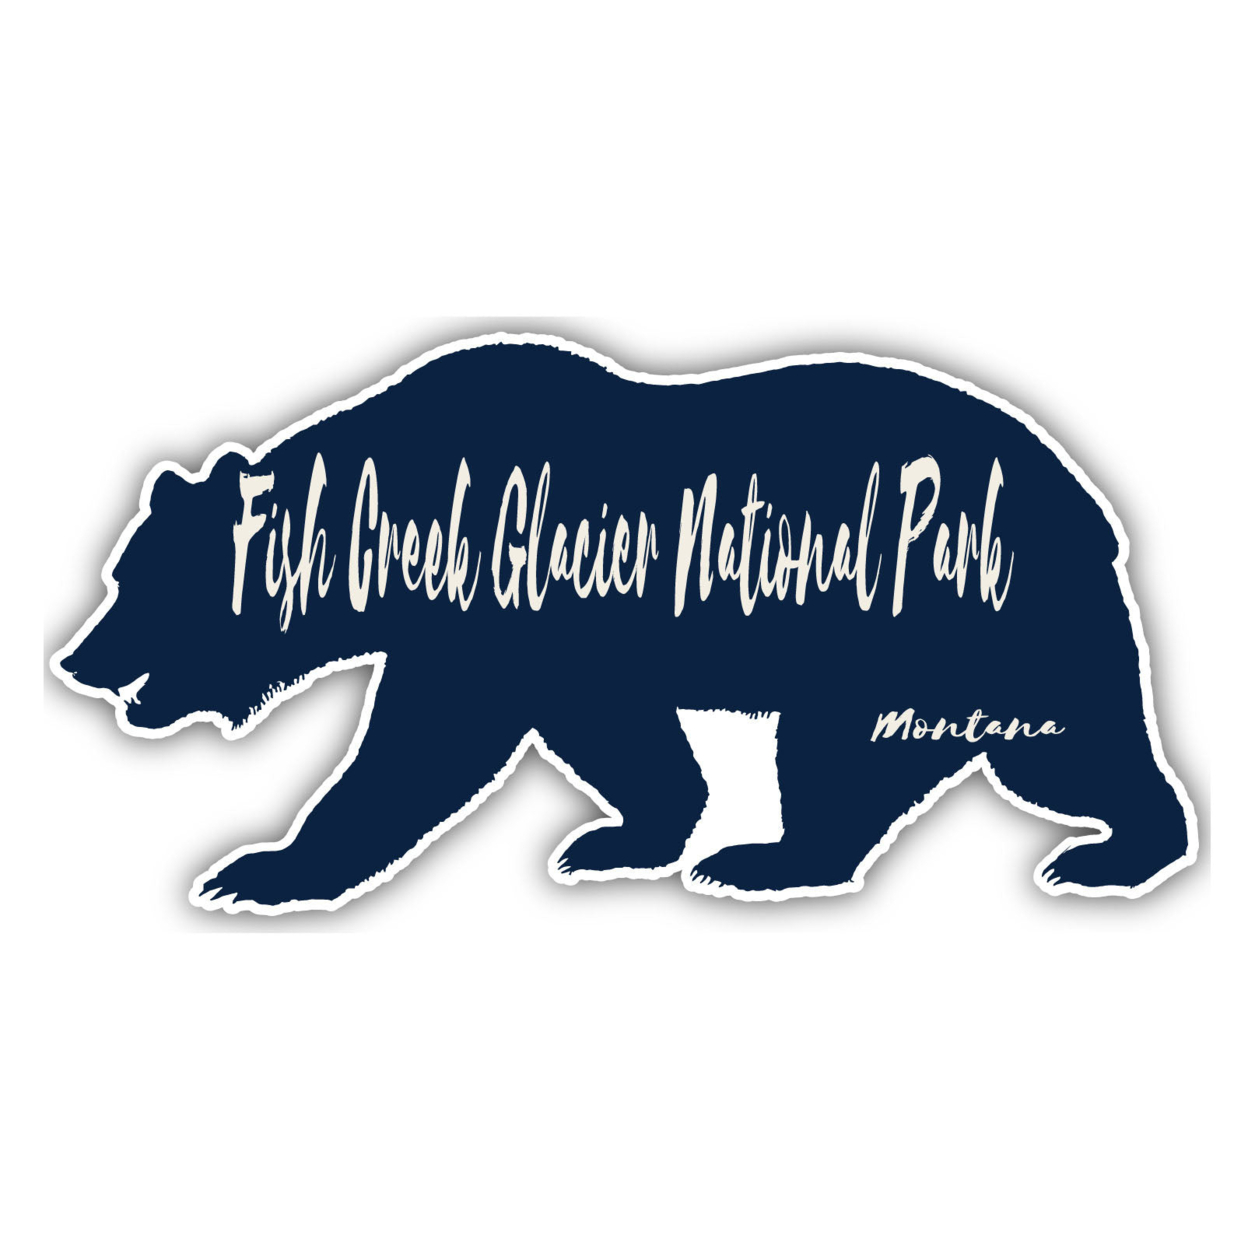 Fish Creek Glacier National Park Montana Souvenir Decorative Stickers (Choose Theme And Size) - Single Unit, 2-Inch, Bear